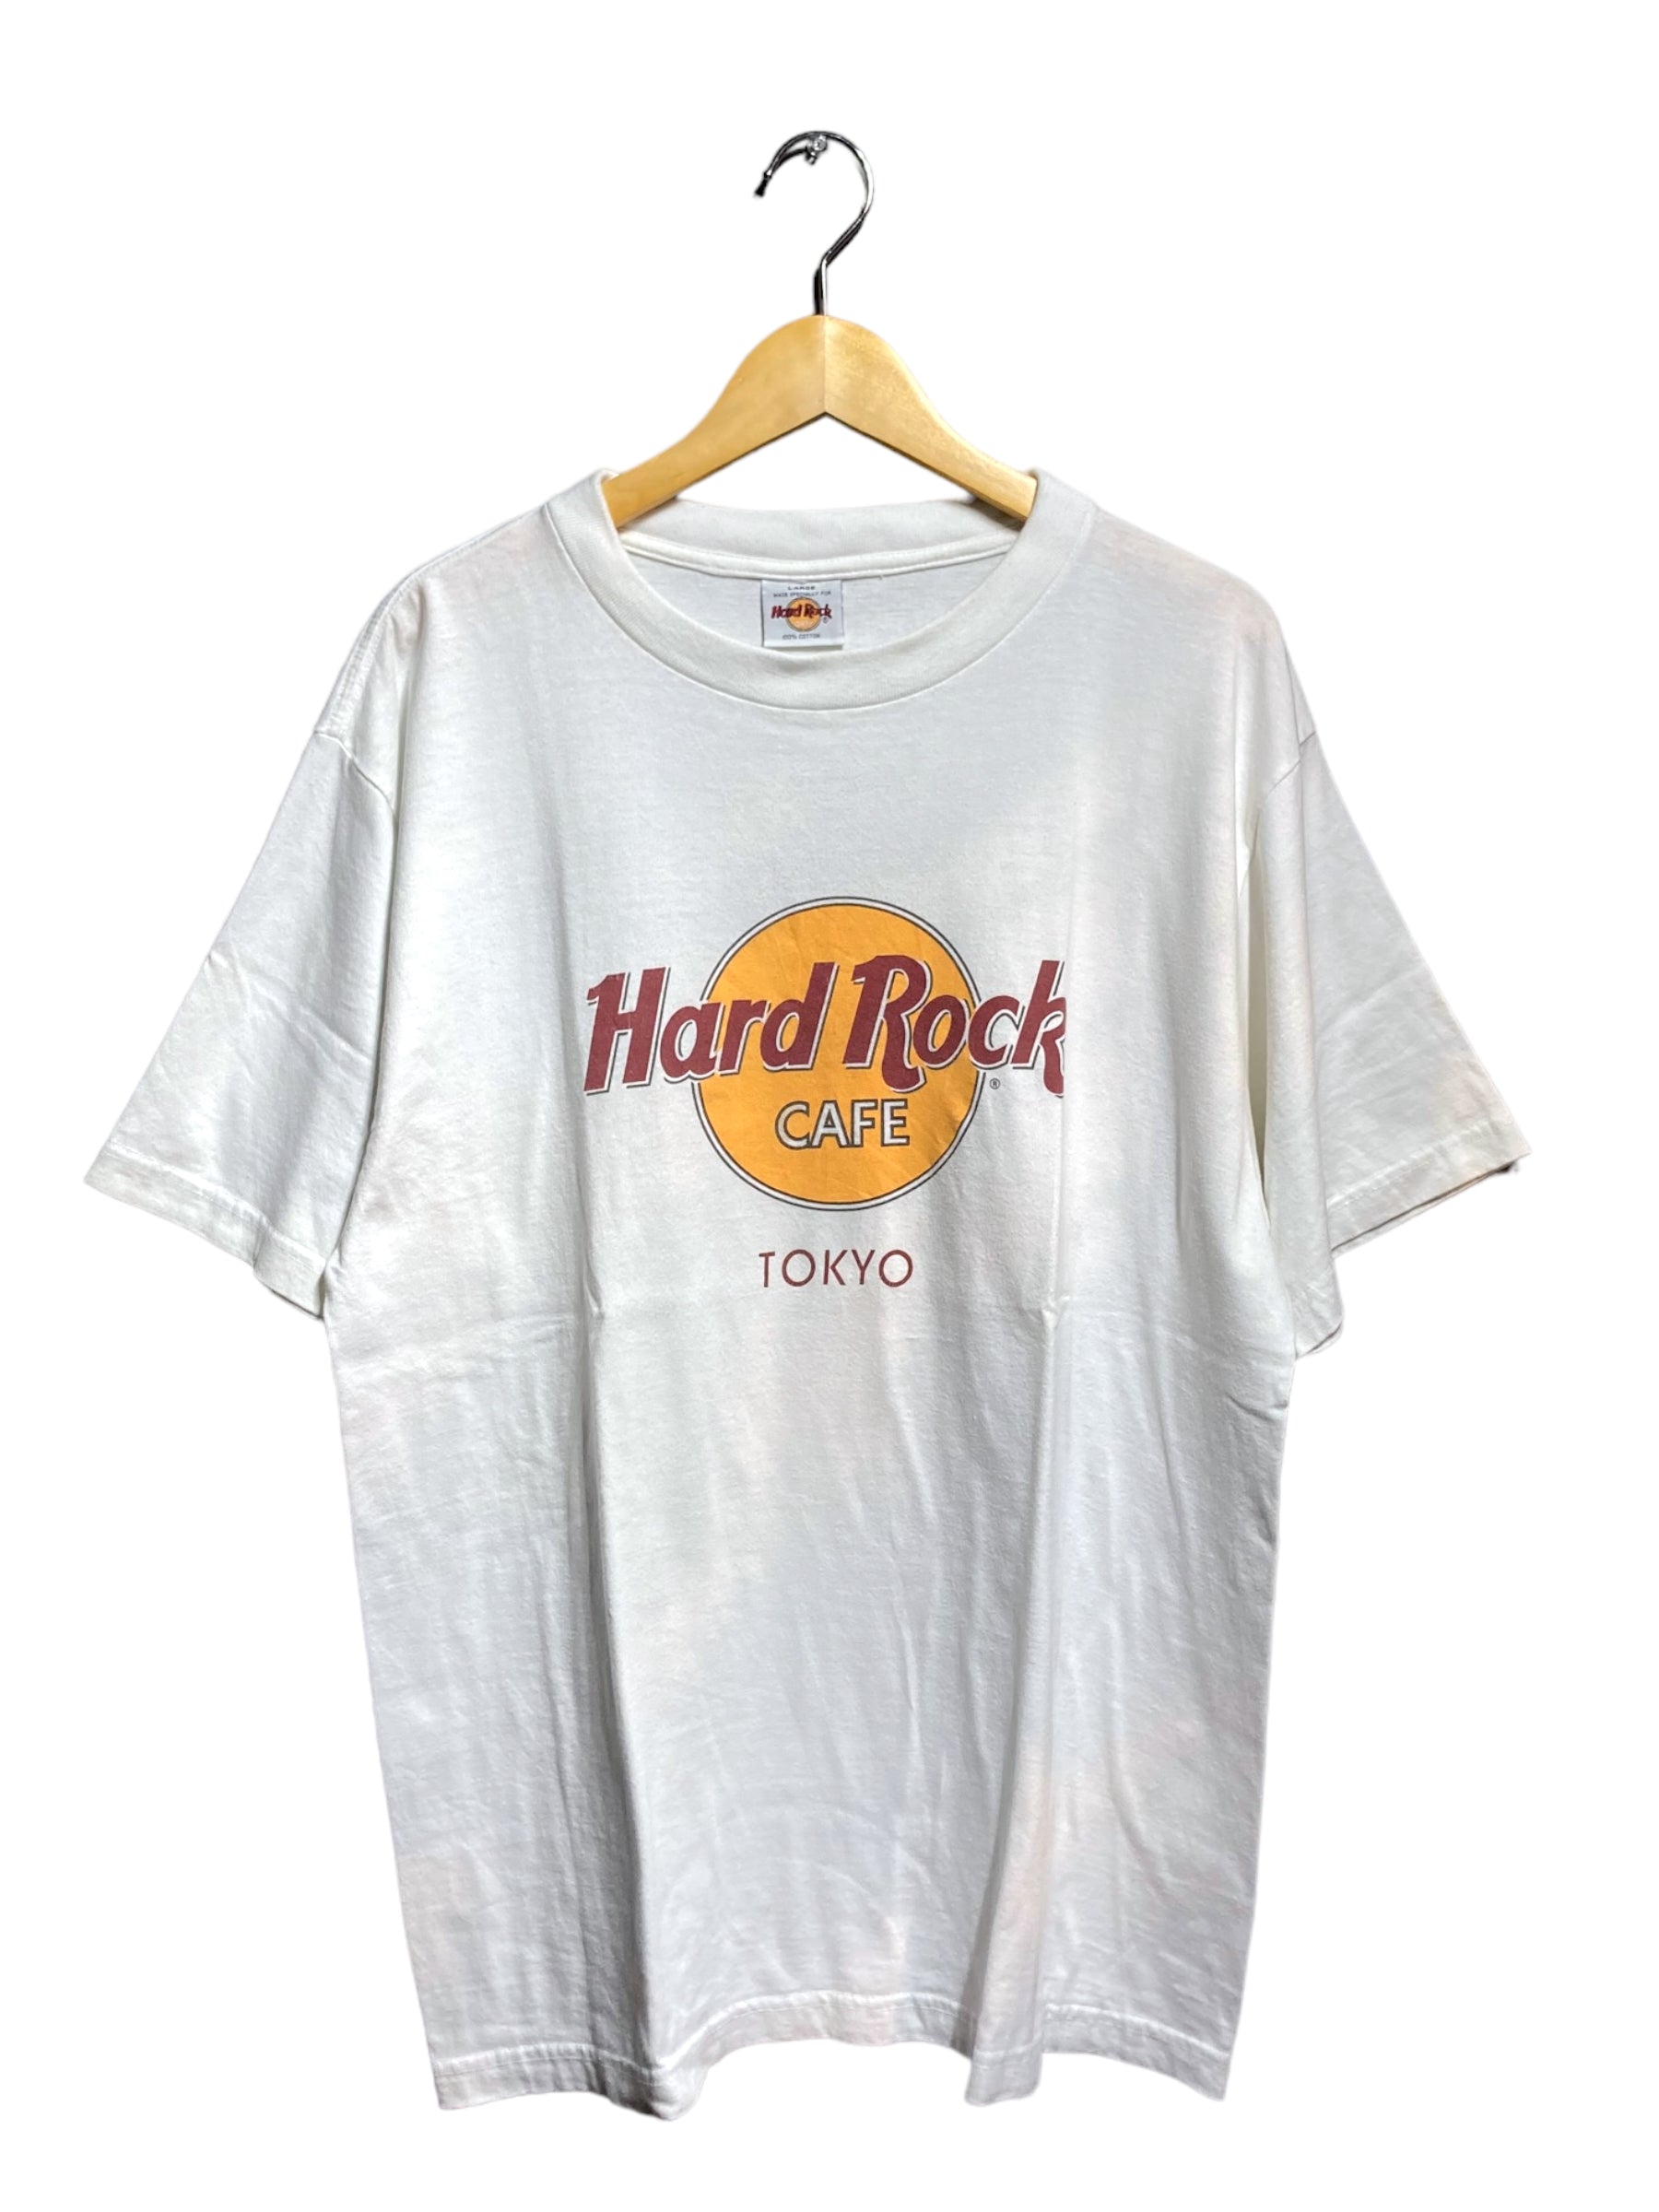 Hard Rock Cafe ハードロック ハードロックカフェ TOKYO 東京 半袖 T